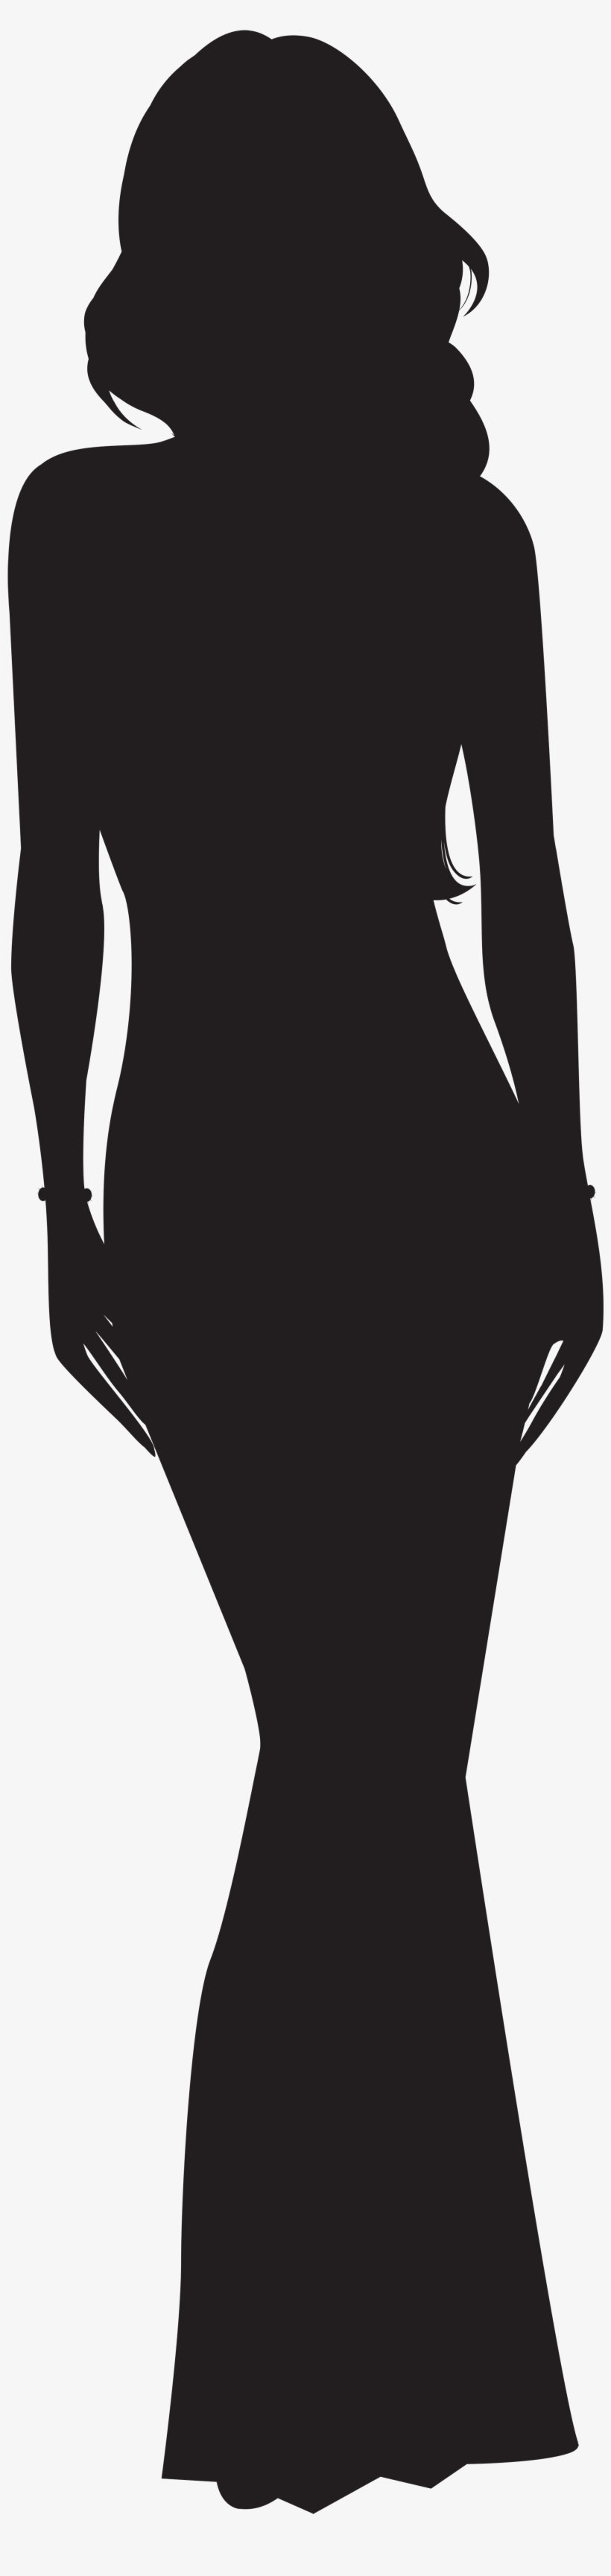 Woman Silhouette Png Transparent, transparent png #101740